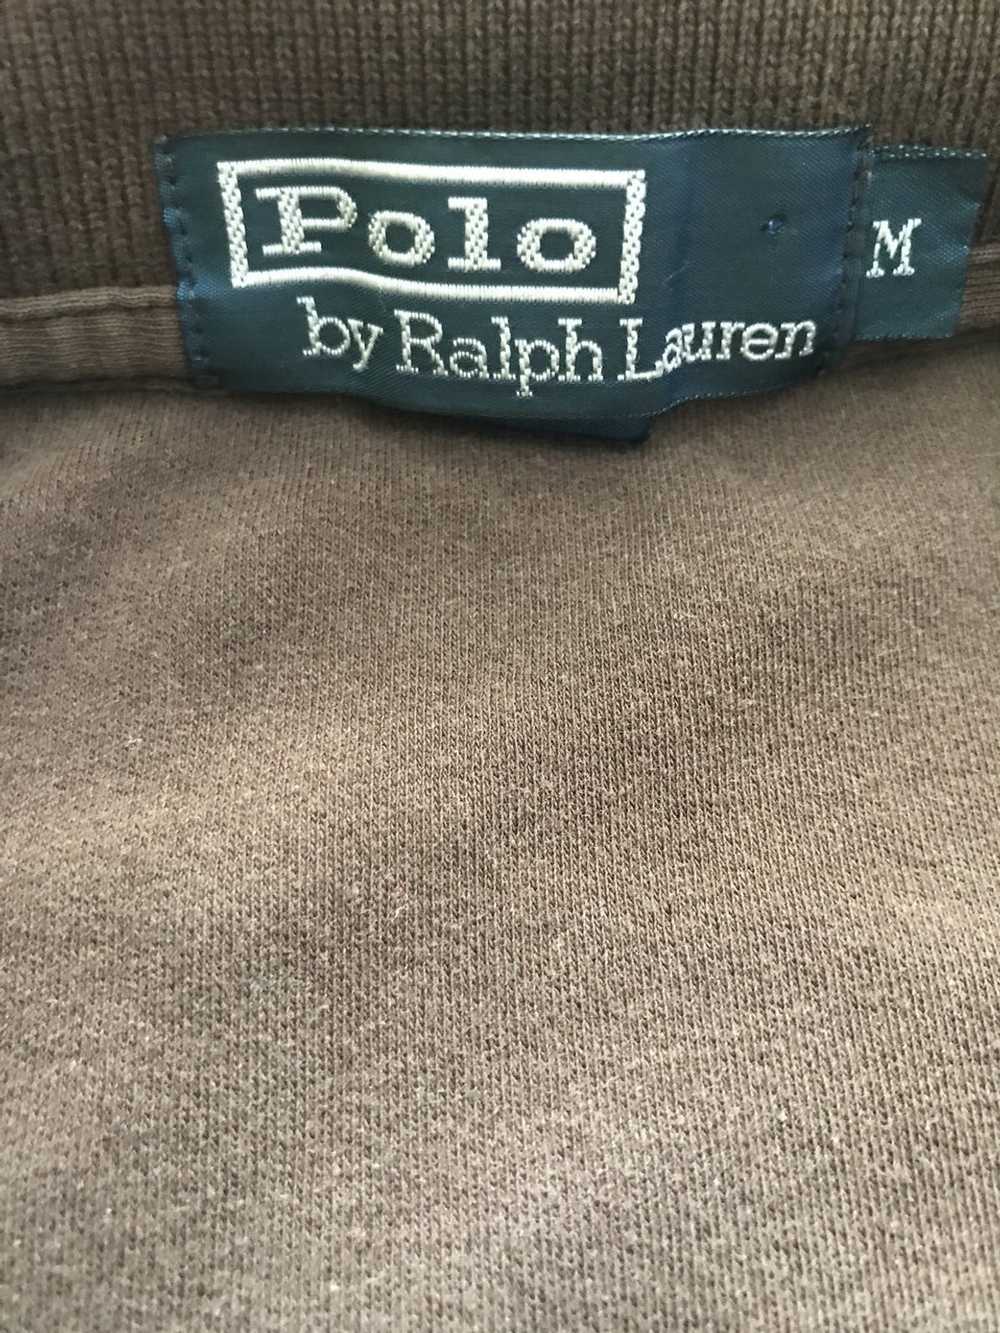 Polo Ralph Lauren Polo Raulph Lauren x Brown Polo - image 3